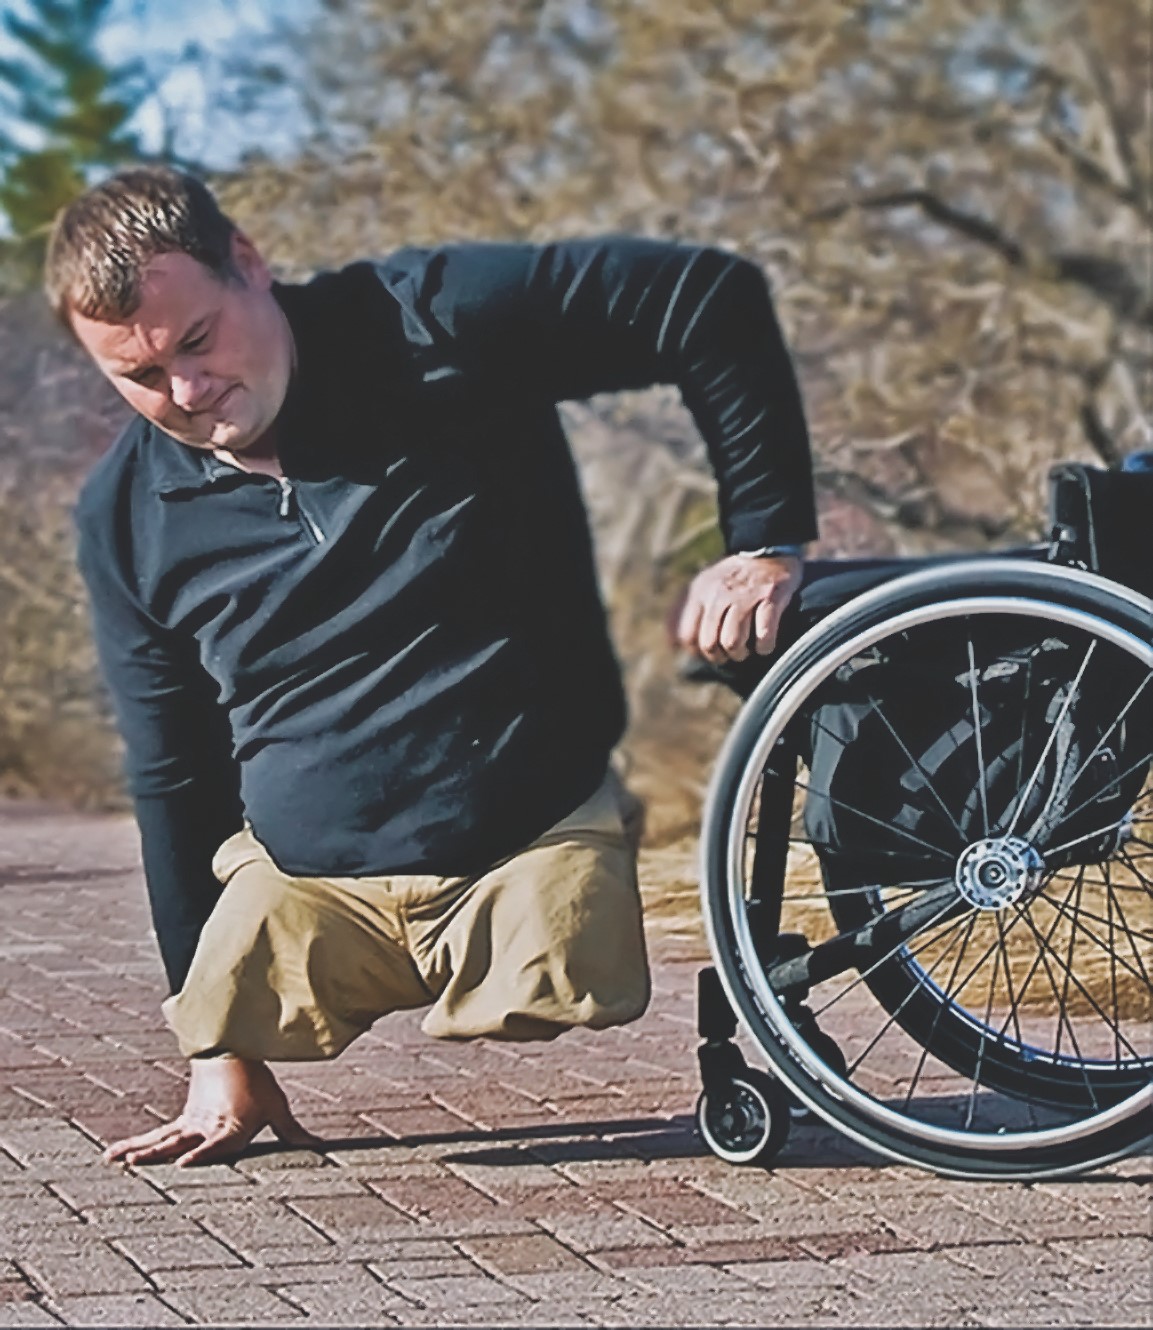 Matt Glowacki helps himself into his wheelchair from the ground.